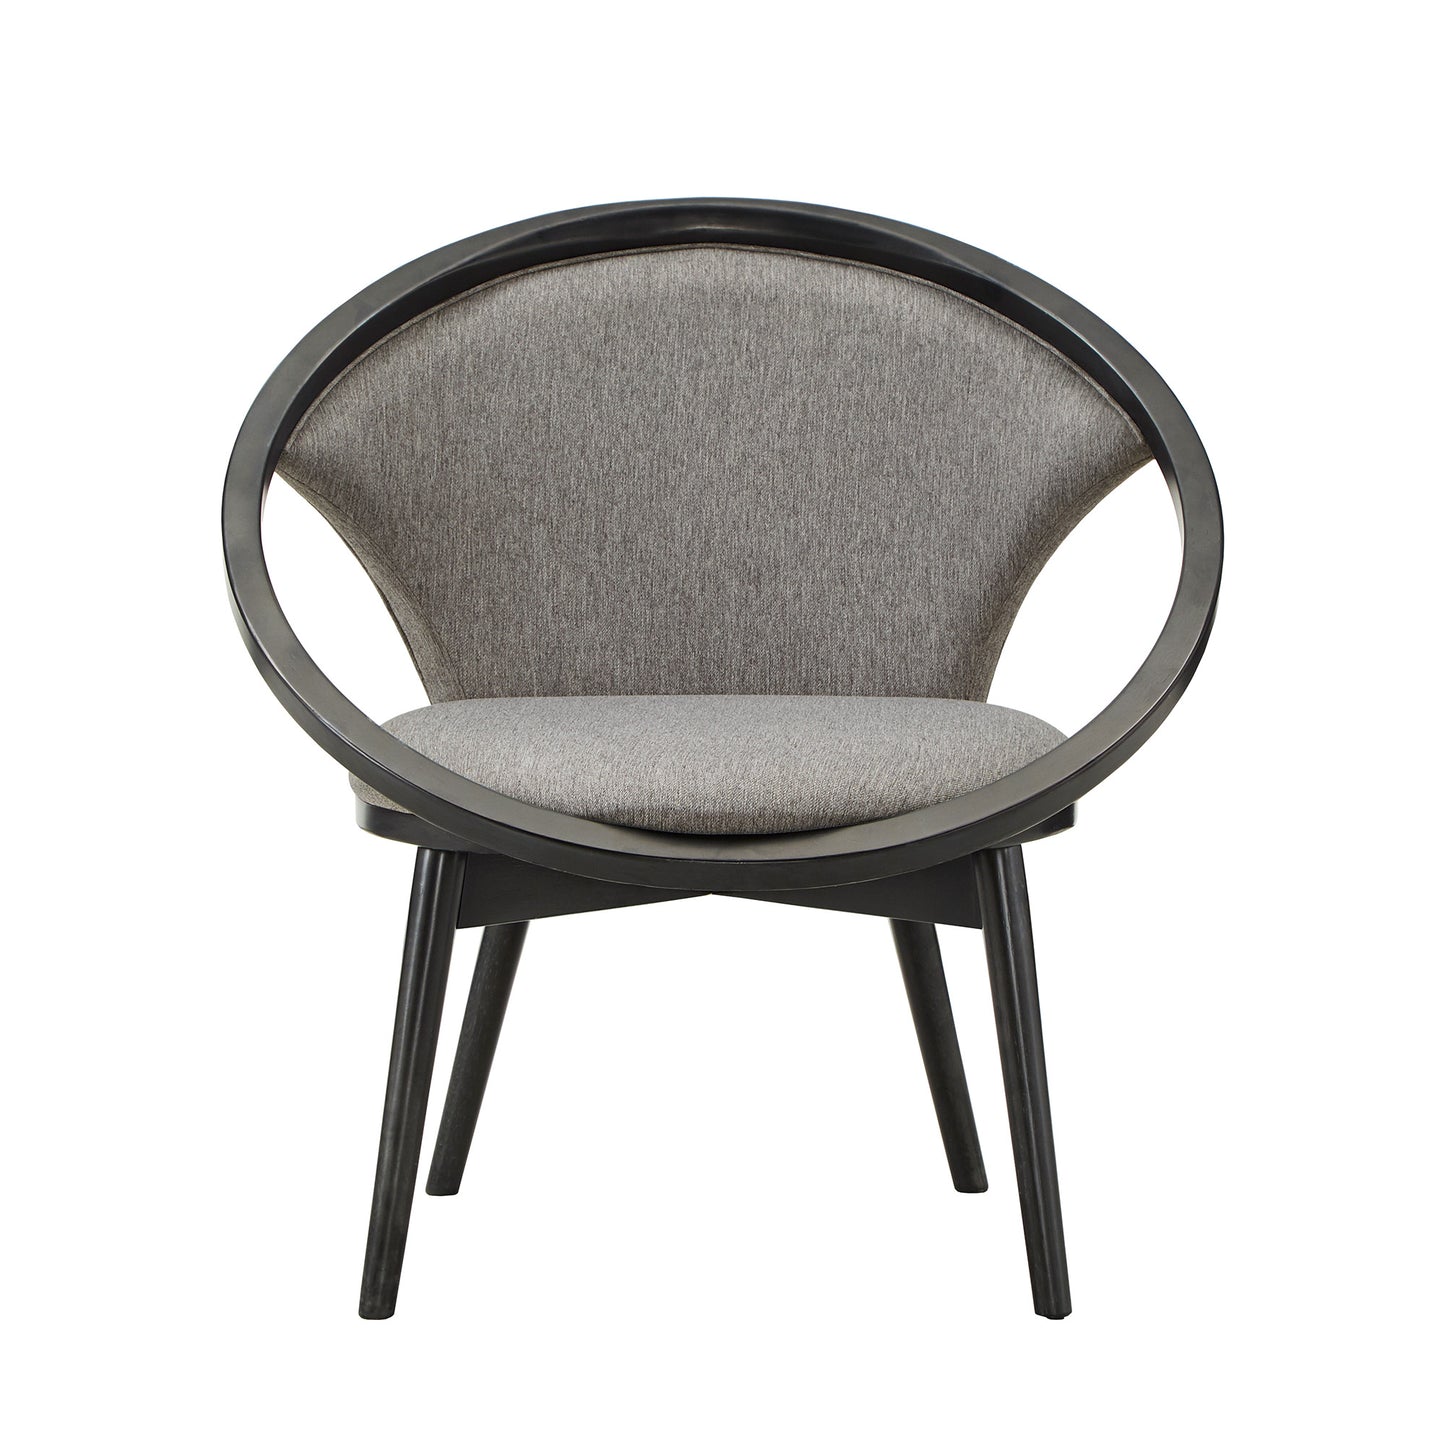 32" Wide Fabric Upholstered Accent Barrel Chair - Dark Charcoal Finish, Grey Herringbone Fabric